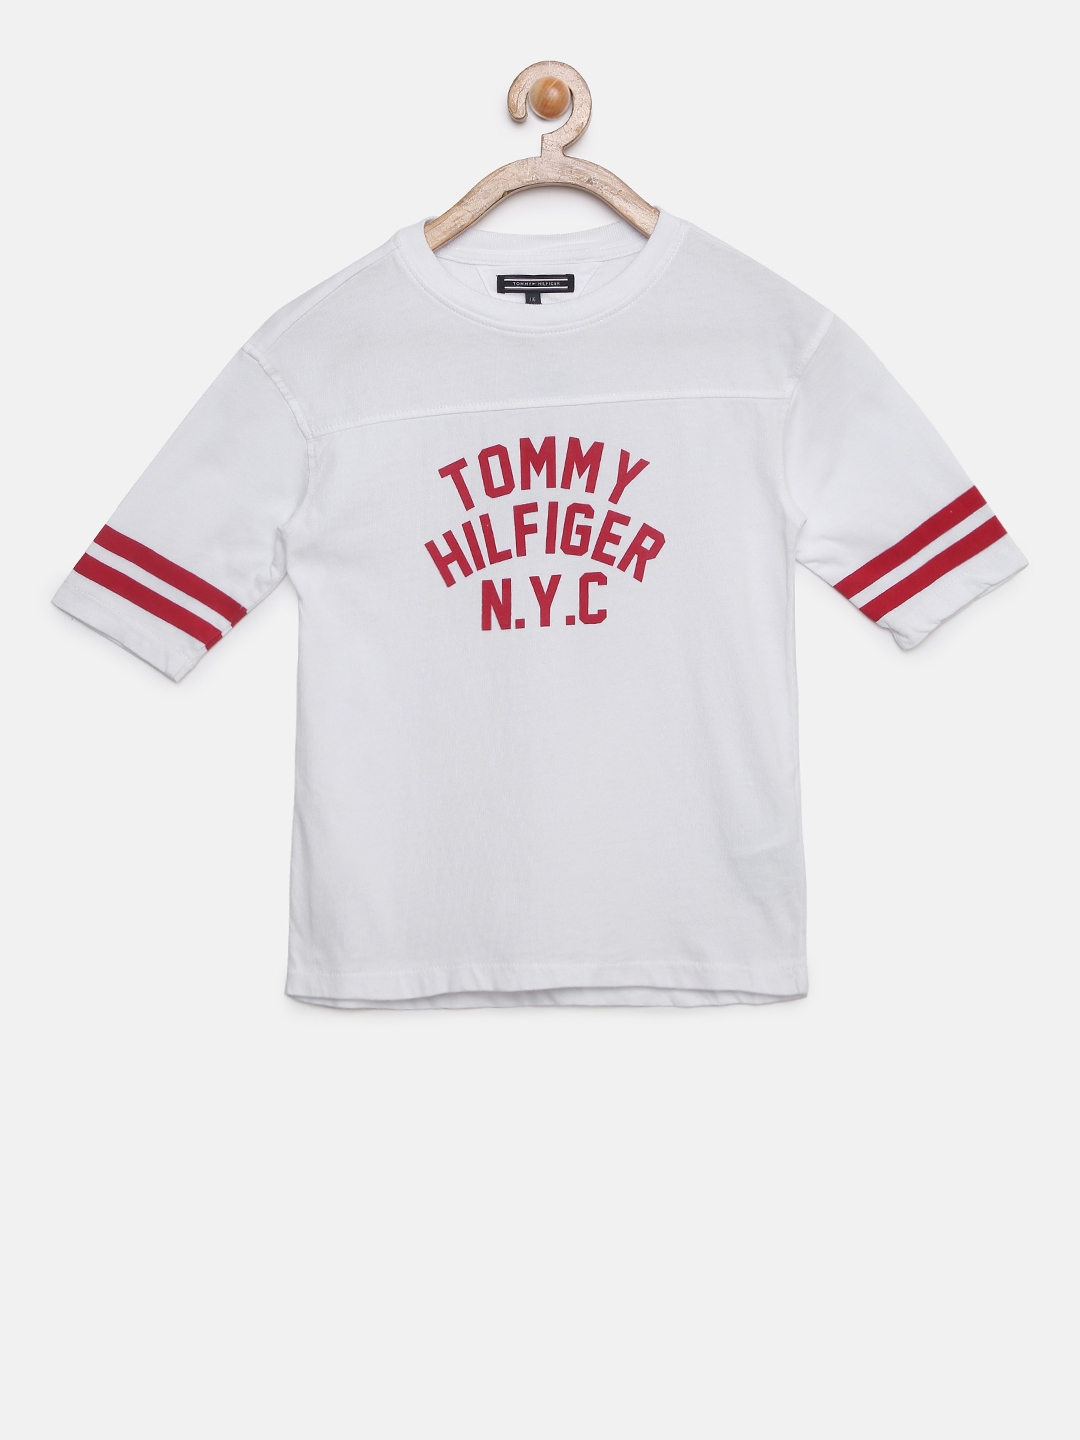 tommy hilfiger girls shirts